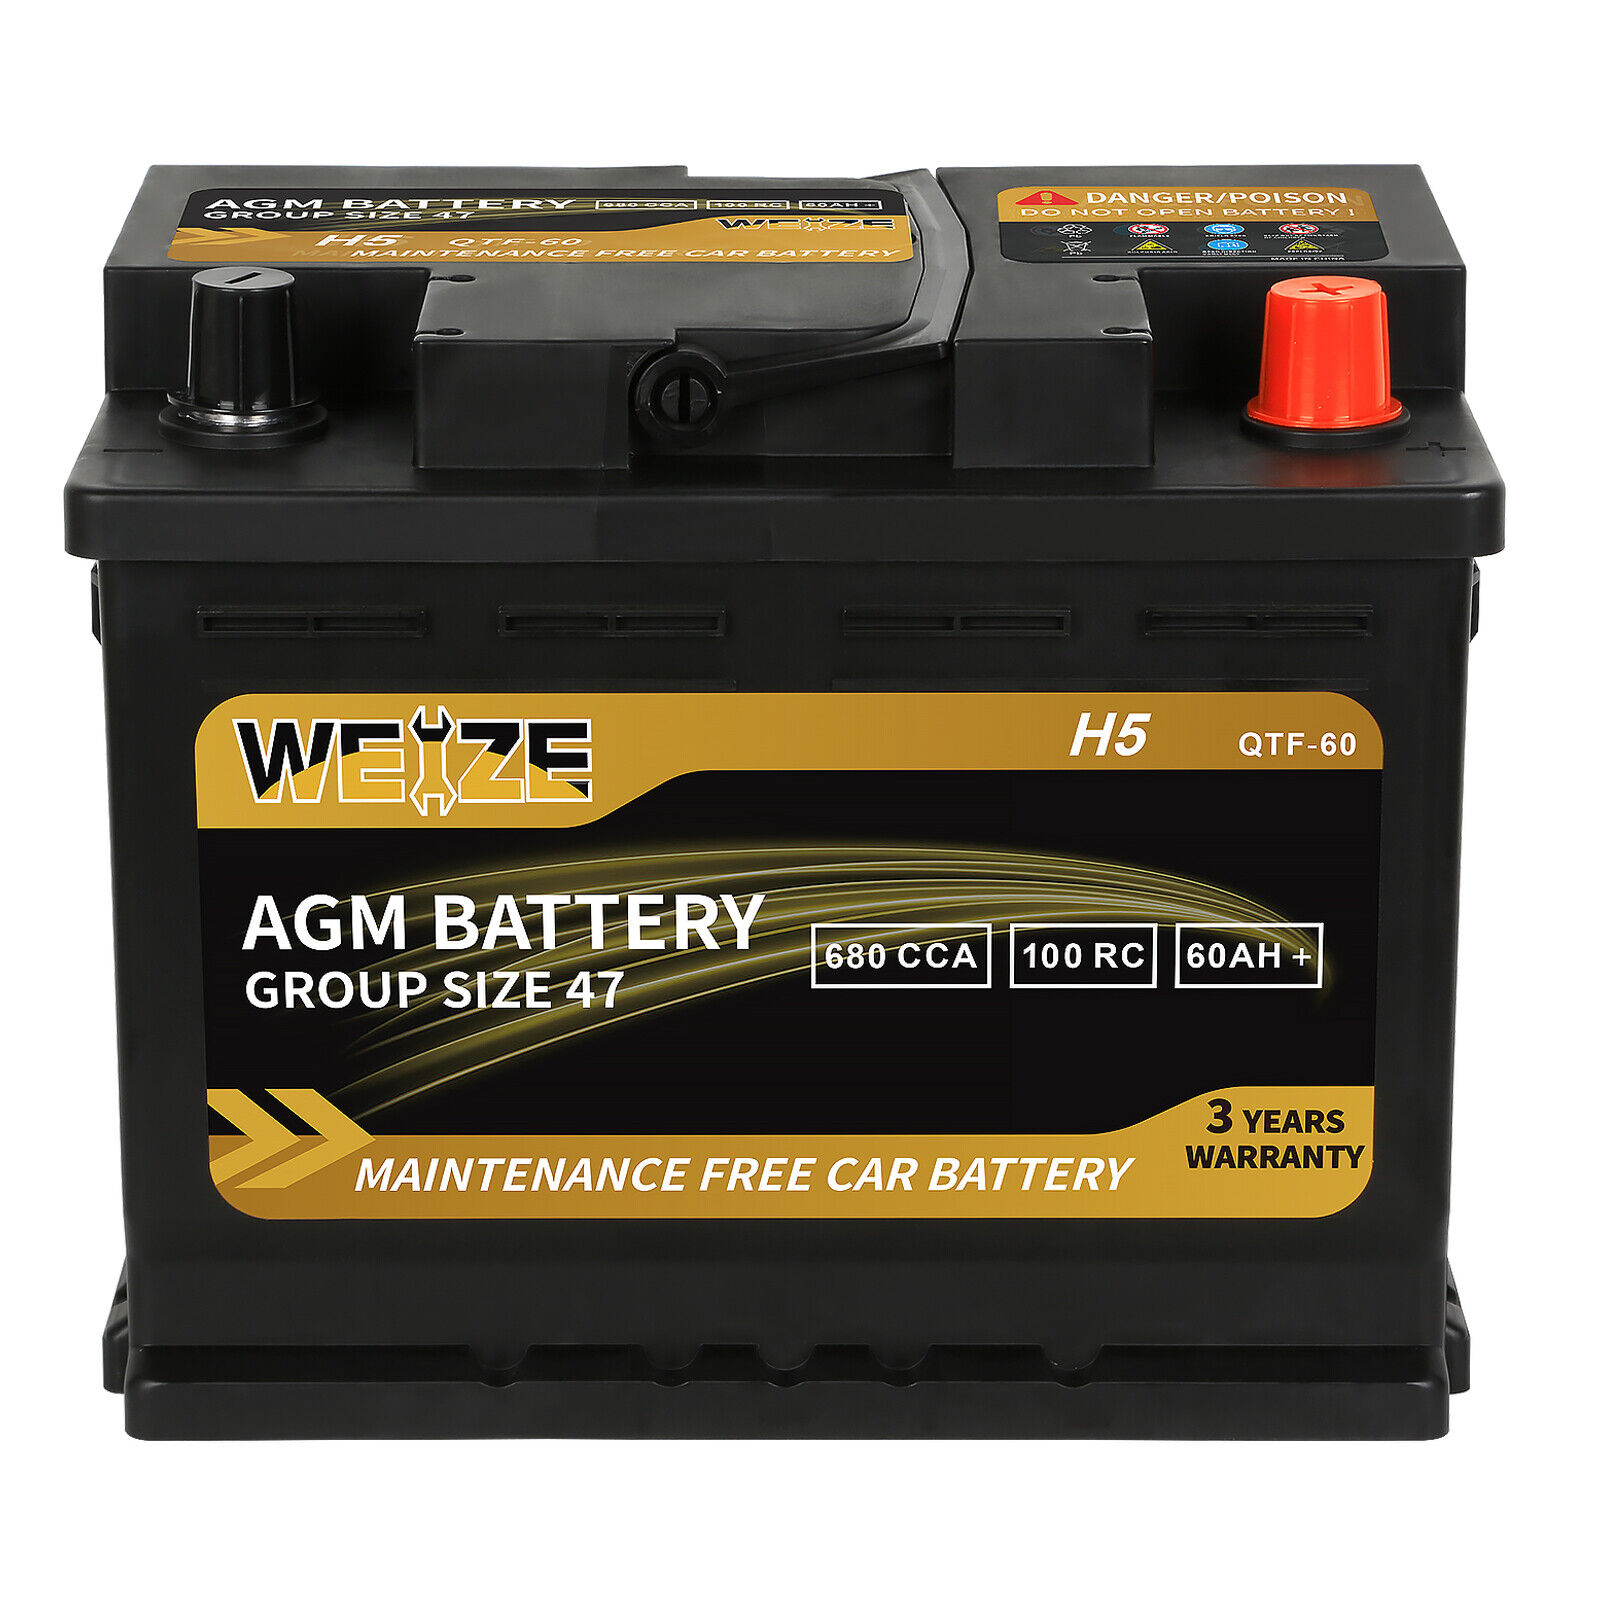 Weize Platinum AGM Battery BCI Group 47, 100RC 680CCA Automotive H5 Battery 